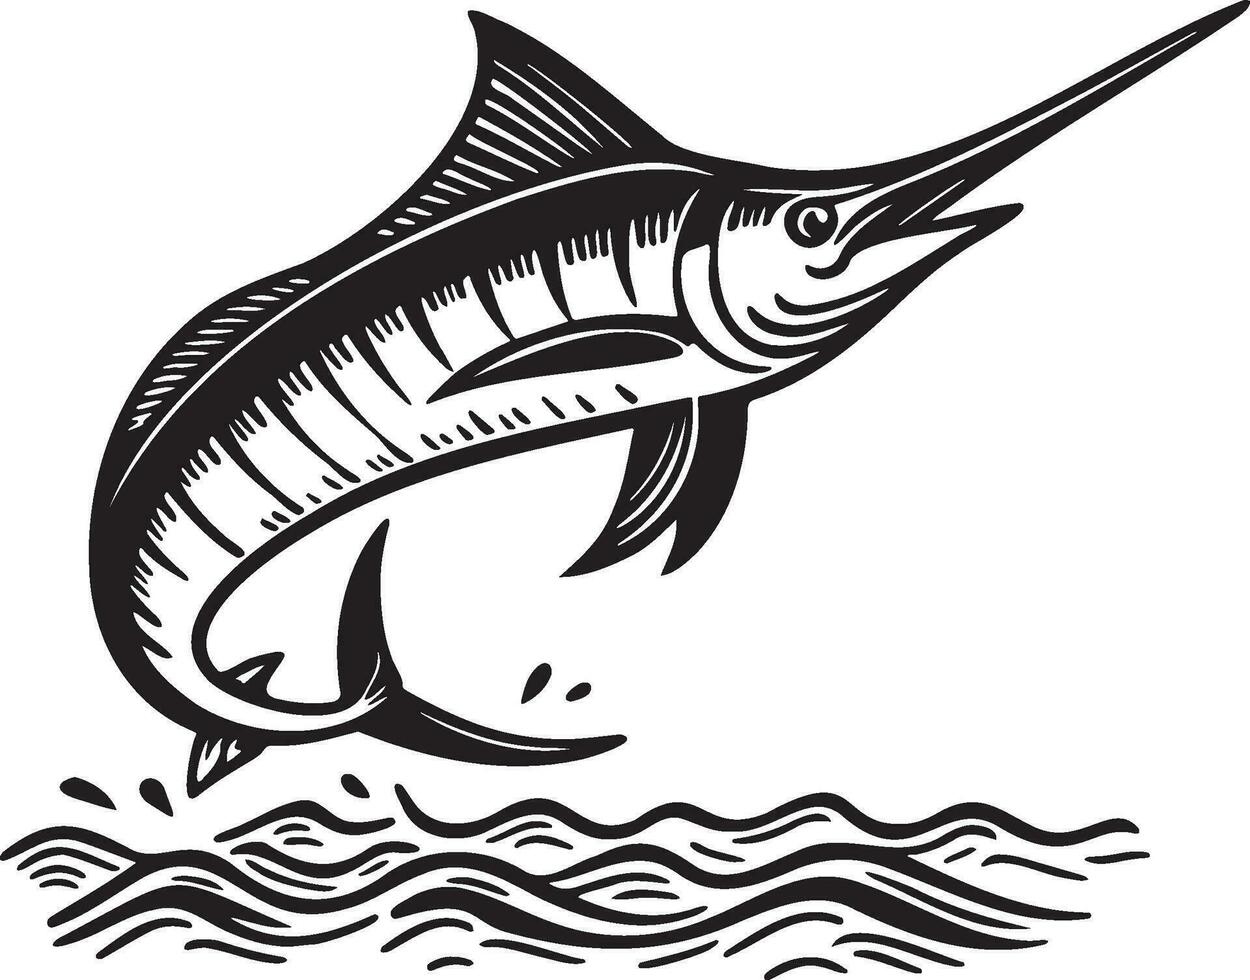 Marlin Fish Sketch Drawing. vector